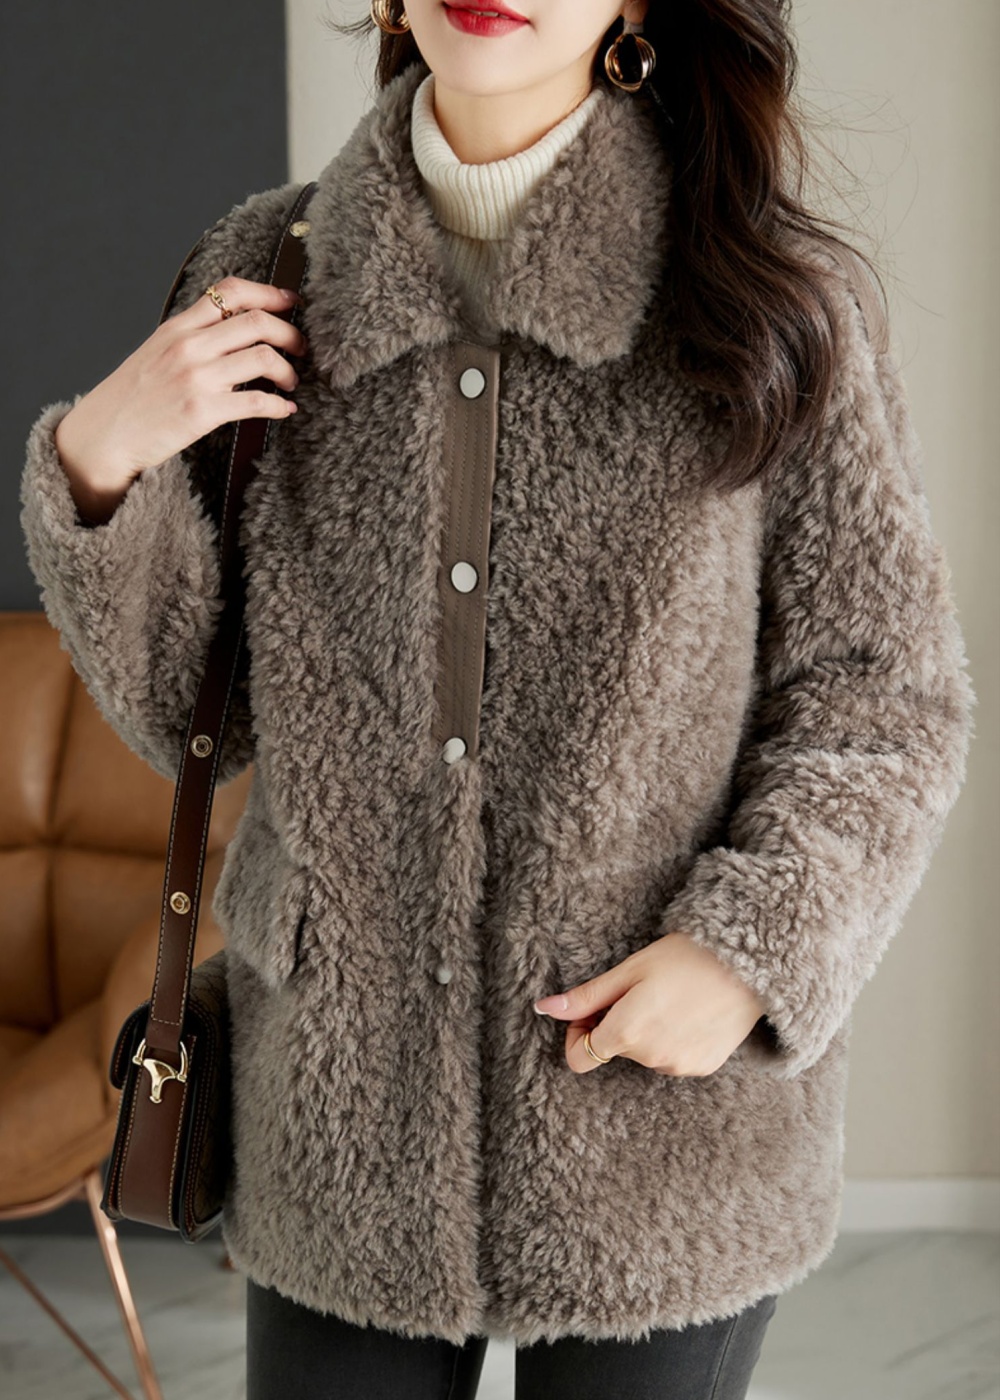 Fashionable coat lambs wool overcoat for women